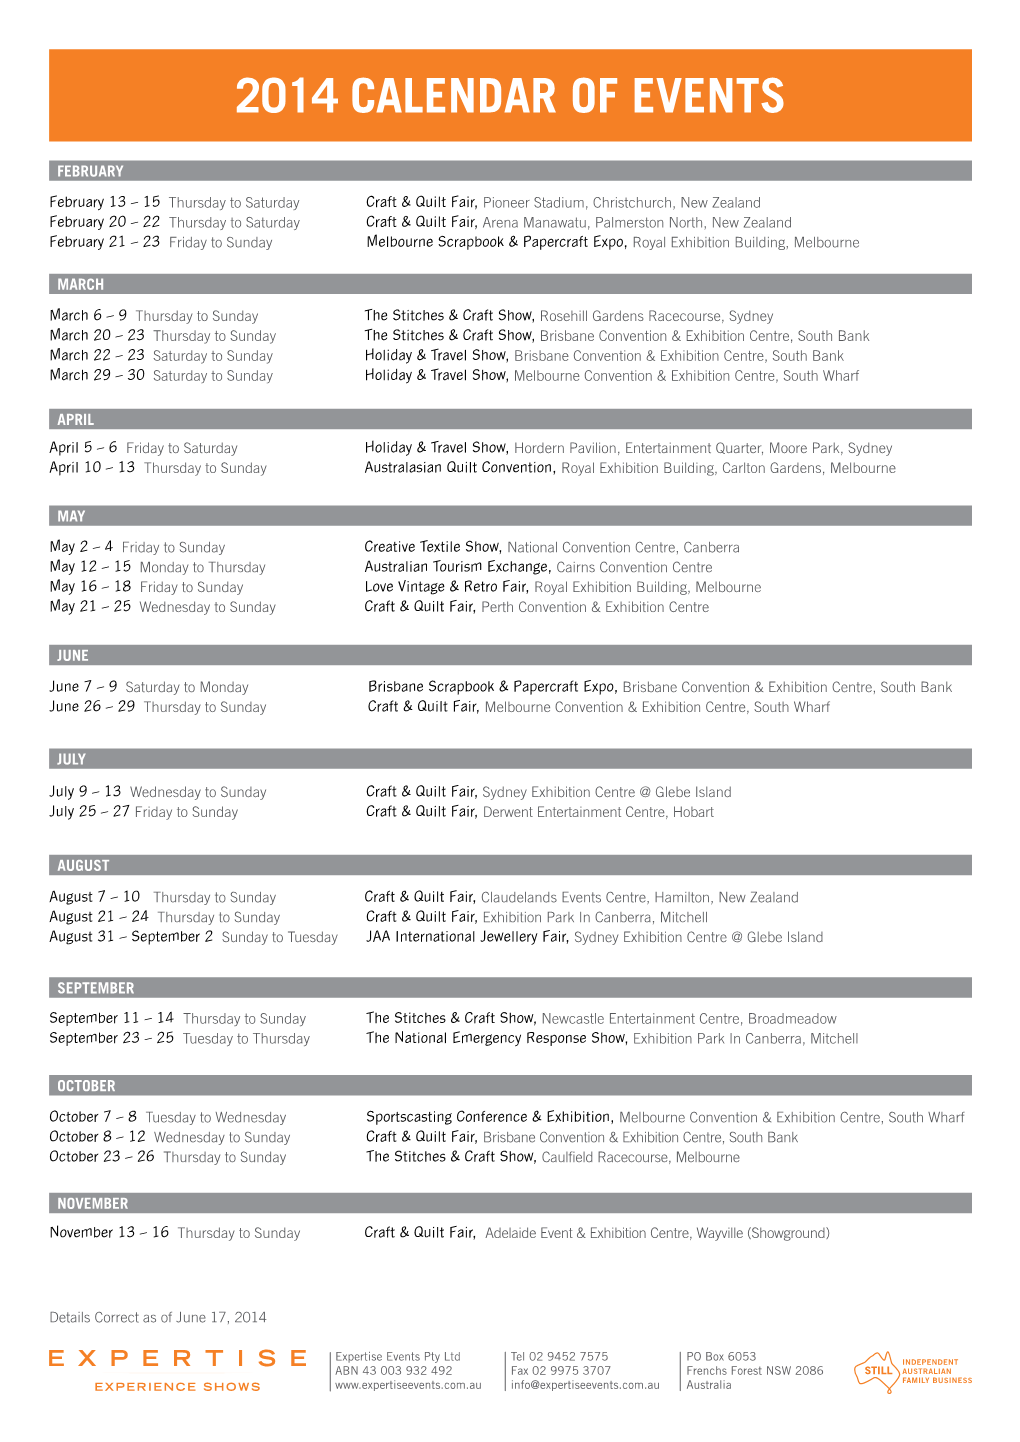 2014 Calendar of Events